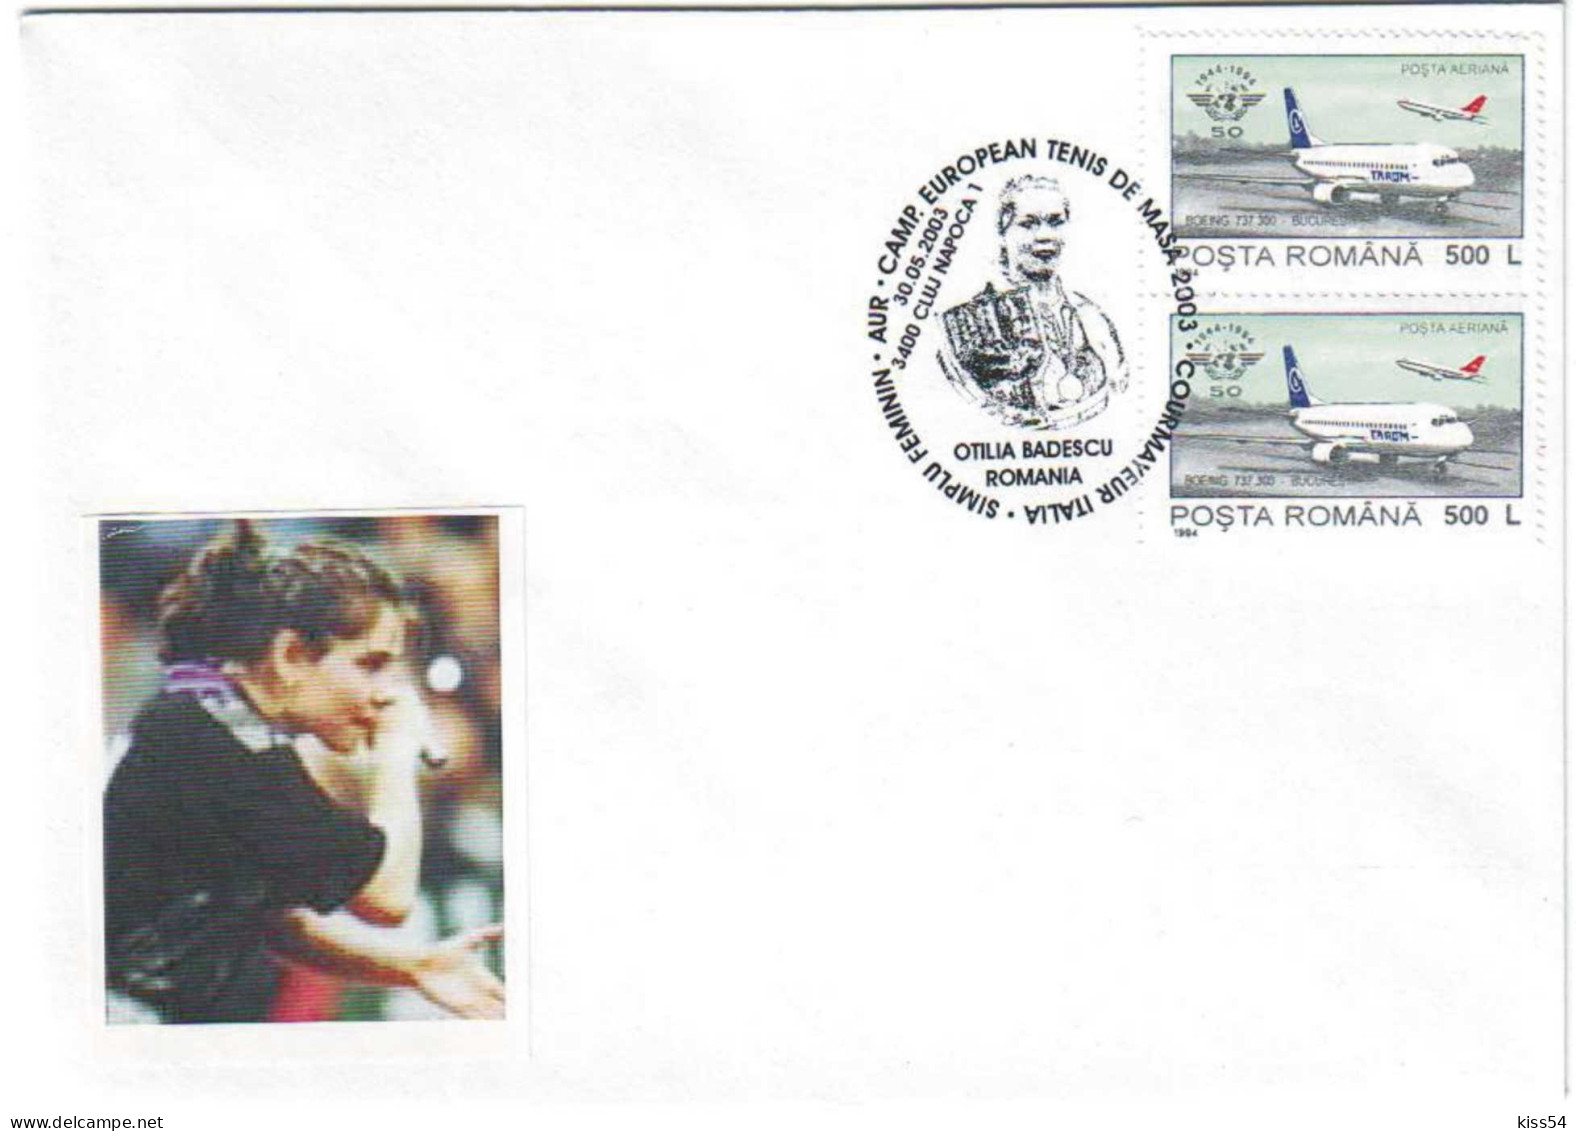 COV 95 - 272 European Women's Table Tennis Championship ITALY, Romania - Cover - Used - 2003 - Briefe U. Dokumente